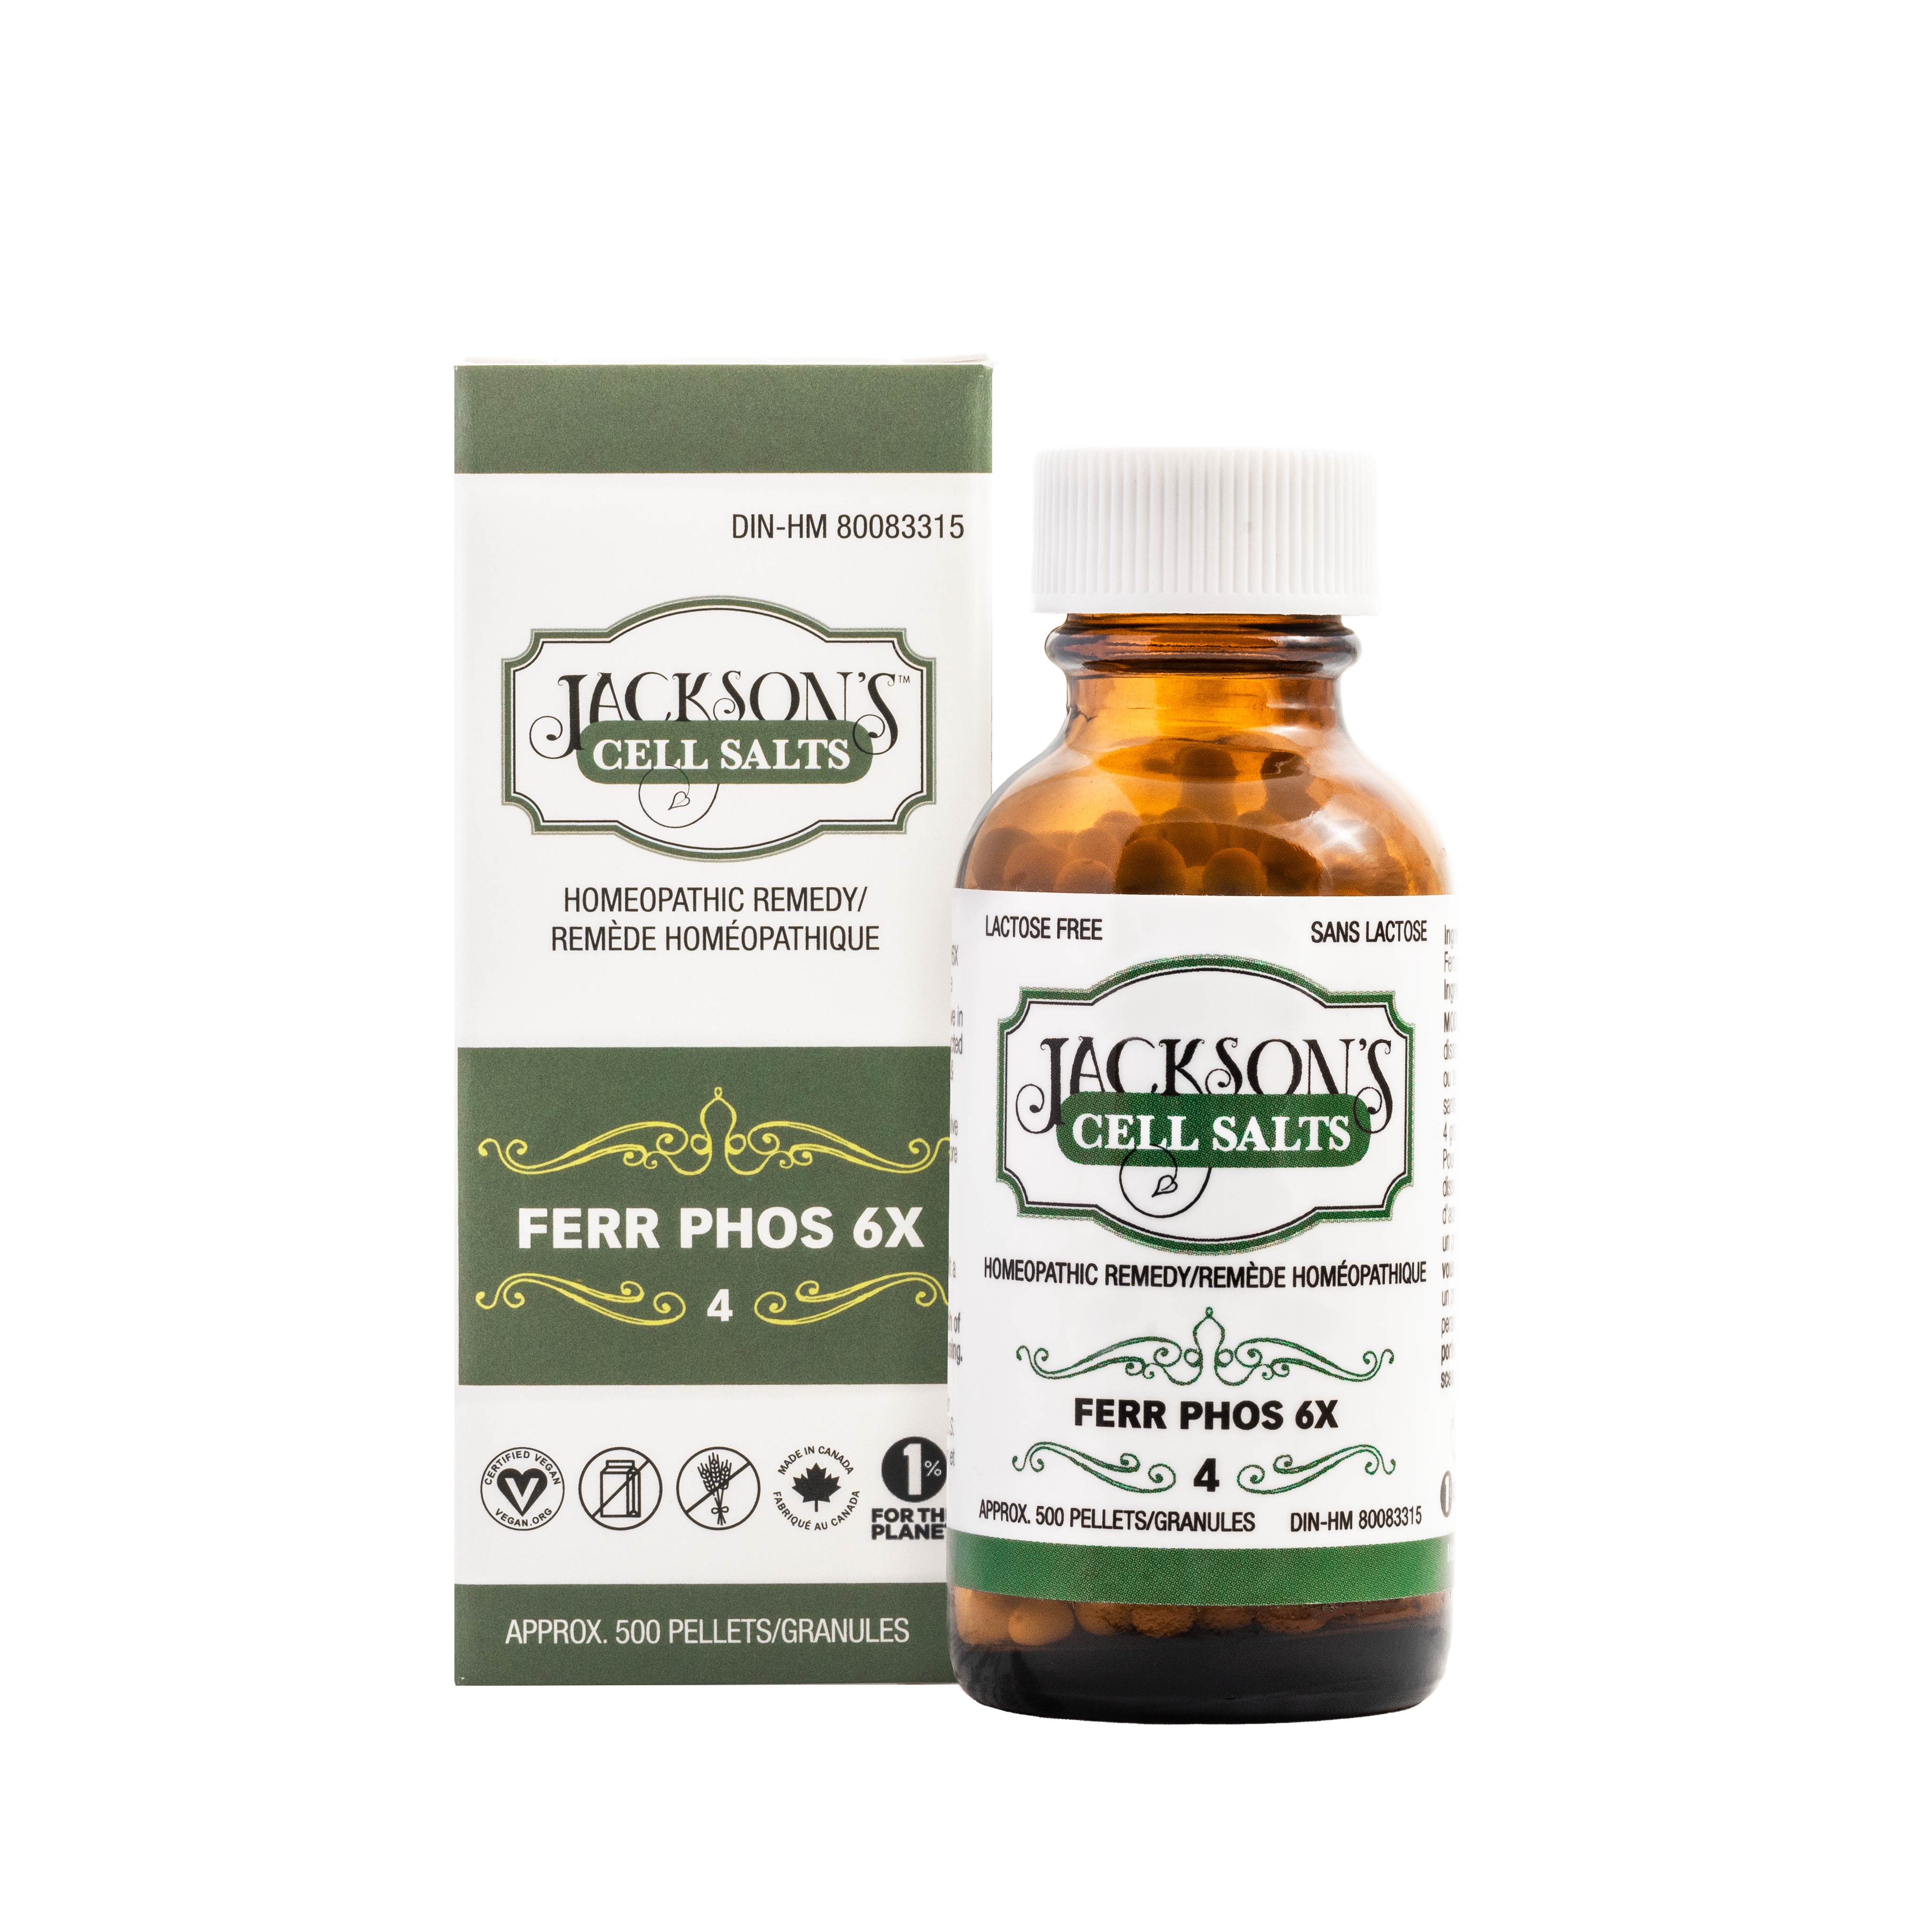 #4 Ferr phos 6X (Ferrum phosphate)- Certified Vegan, Lactose-Free Schuessler Cell (Tissue) Salt